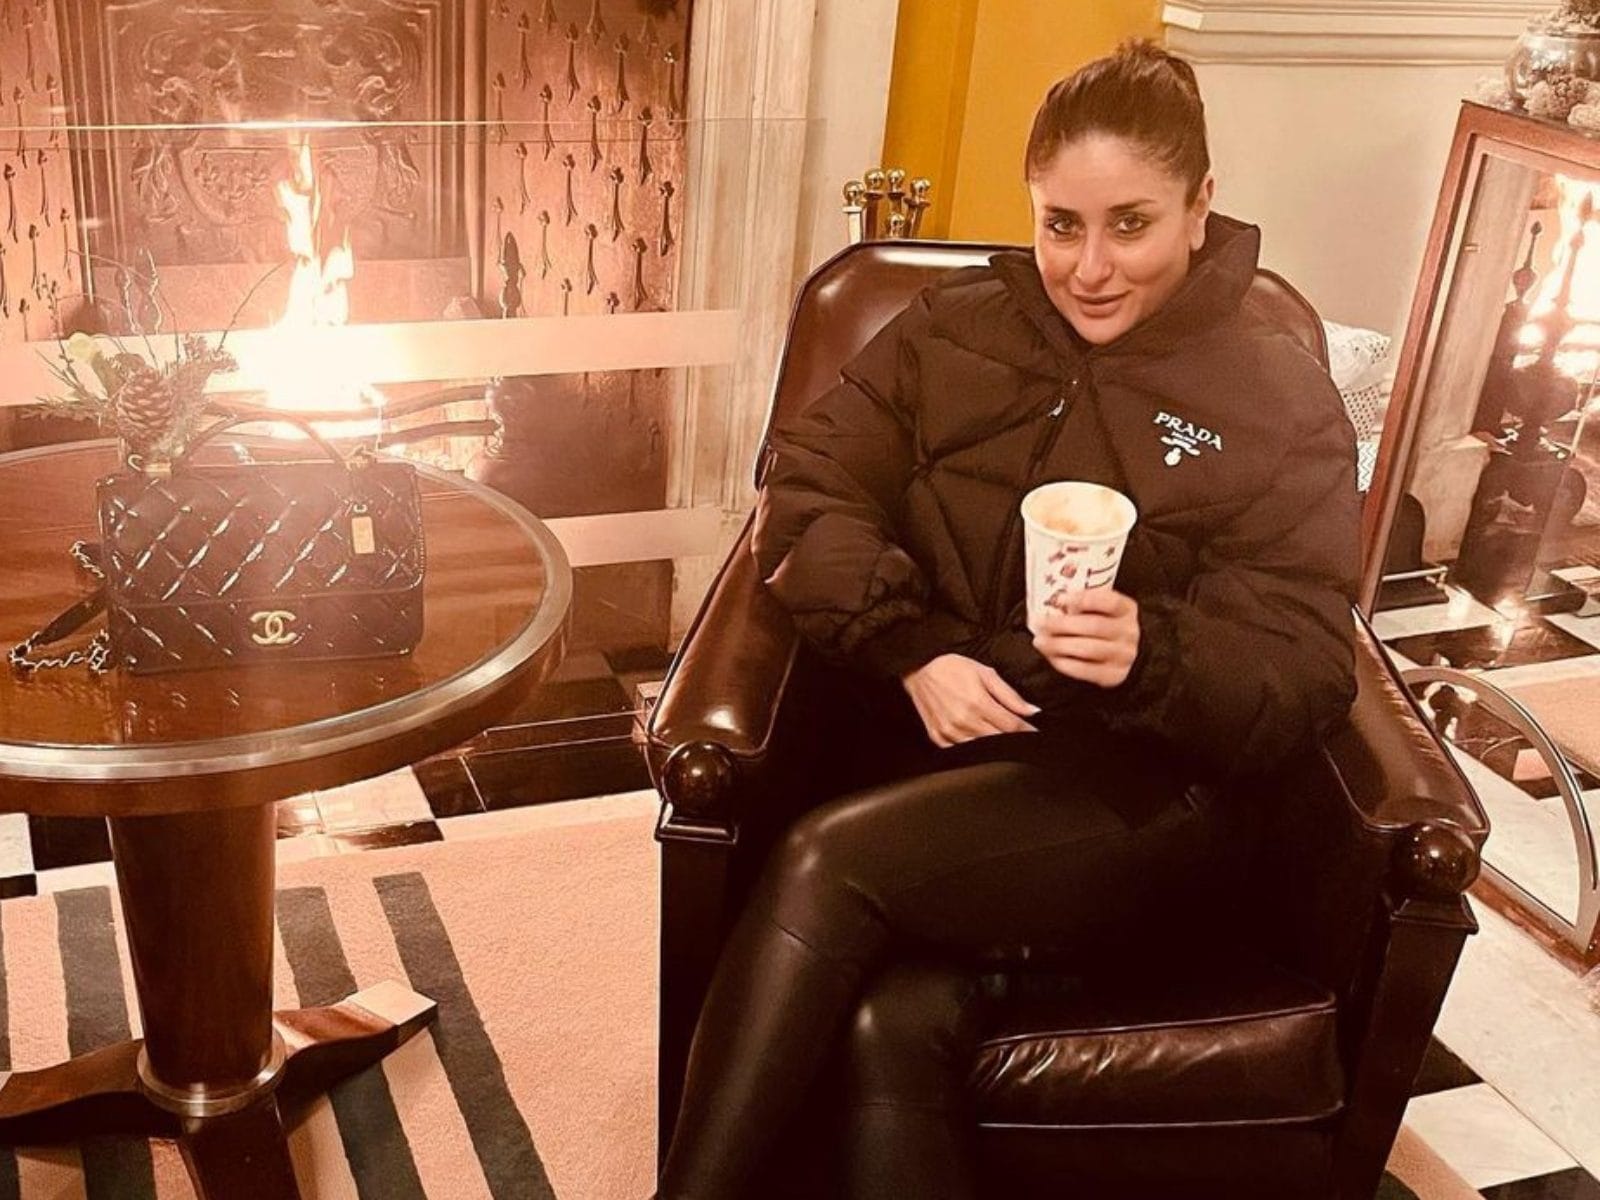 Is Kareena Ki Sexy Video - Kareena Kapoor Serves Hot Winter Look in Stylish Jacket, Leather Pants And  Boots; Pics Go Viral - News18